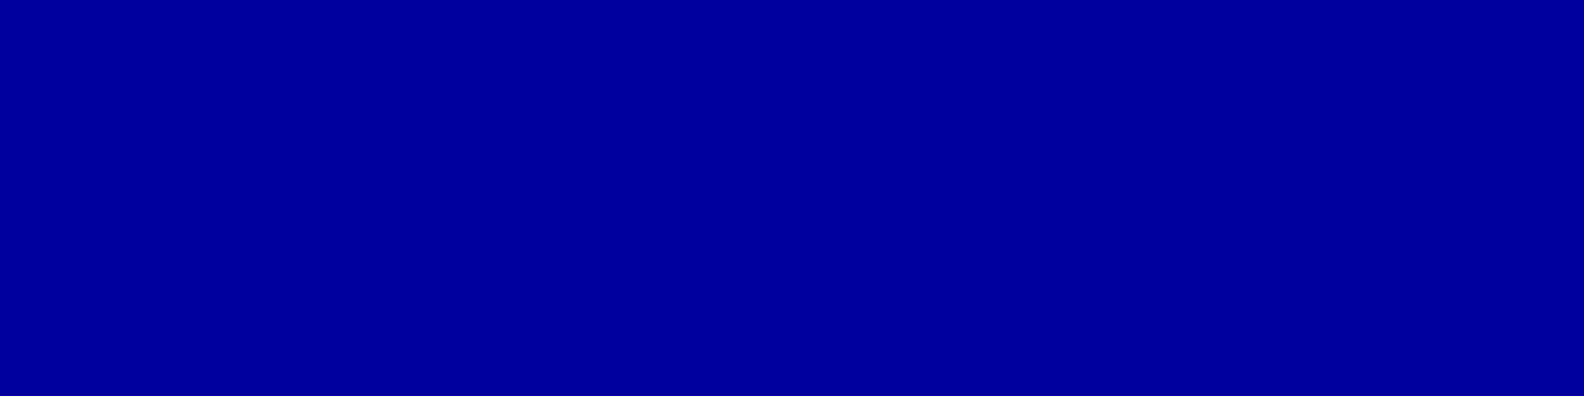 1584x396 Duke Blue Solid Color Background